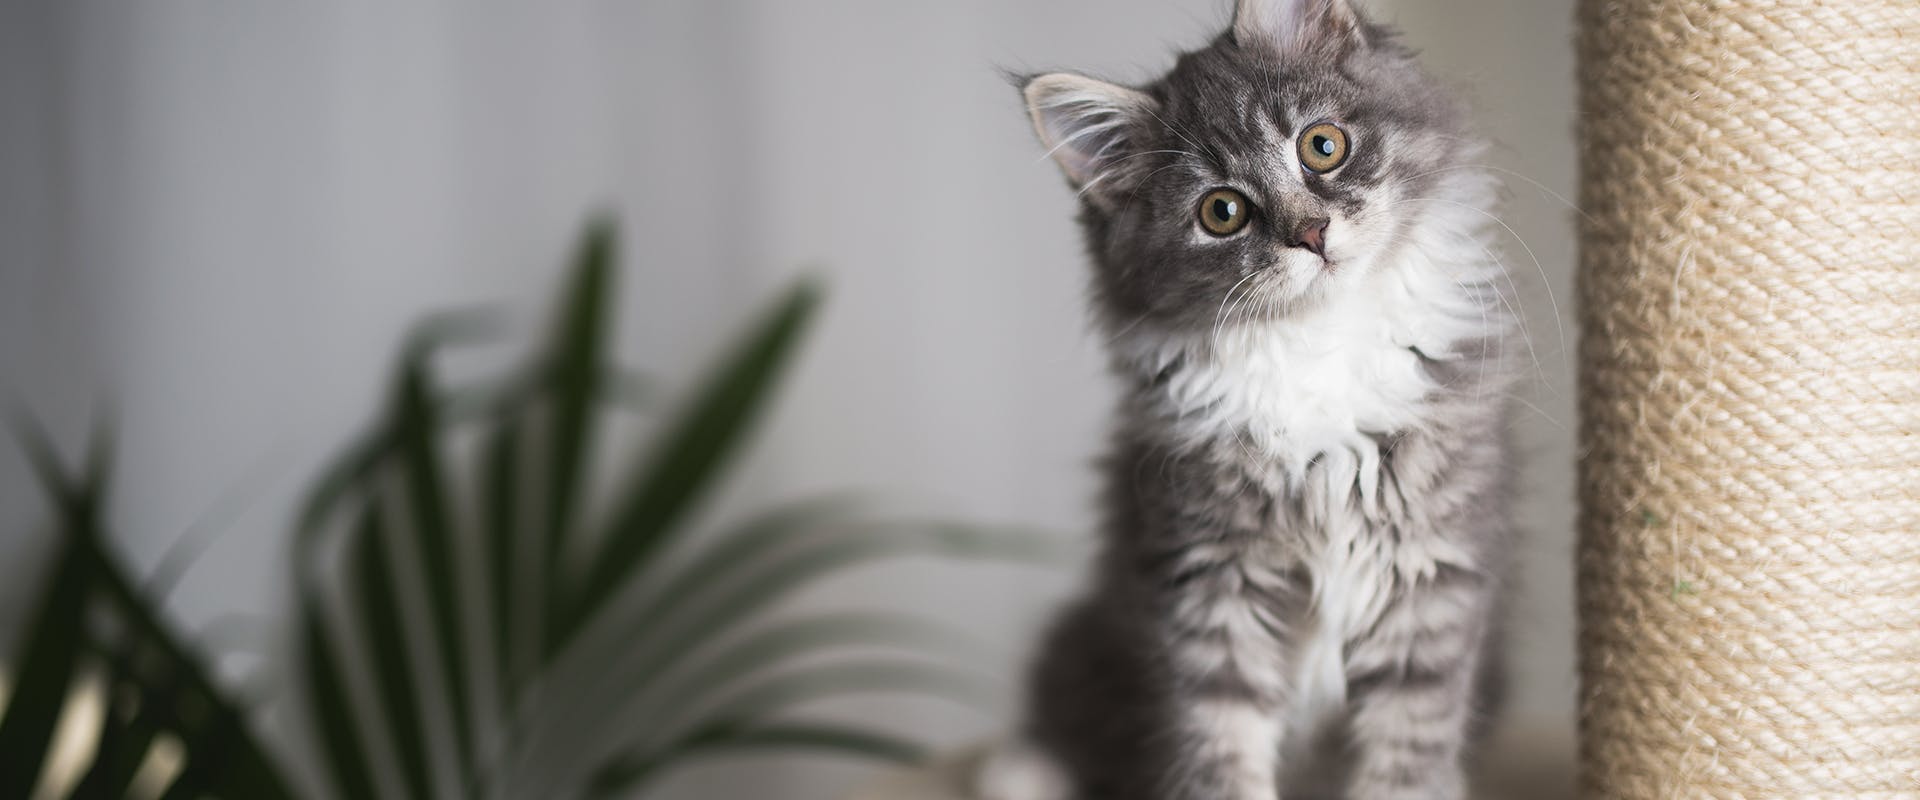 A fluffy gray kitten standing next to a scratching post